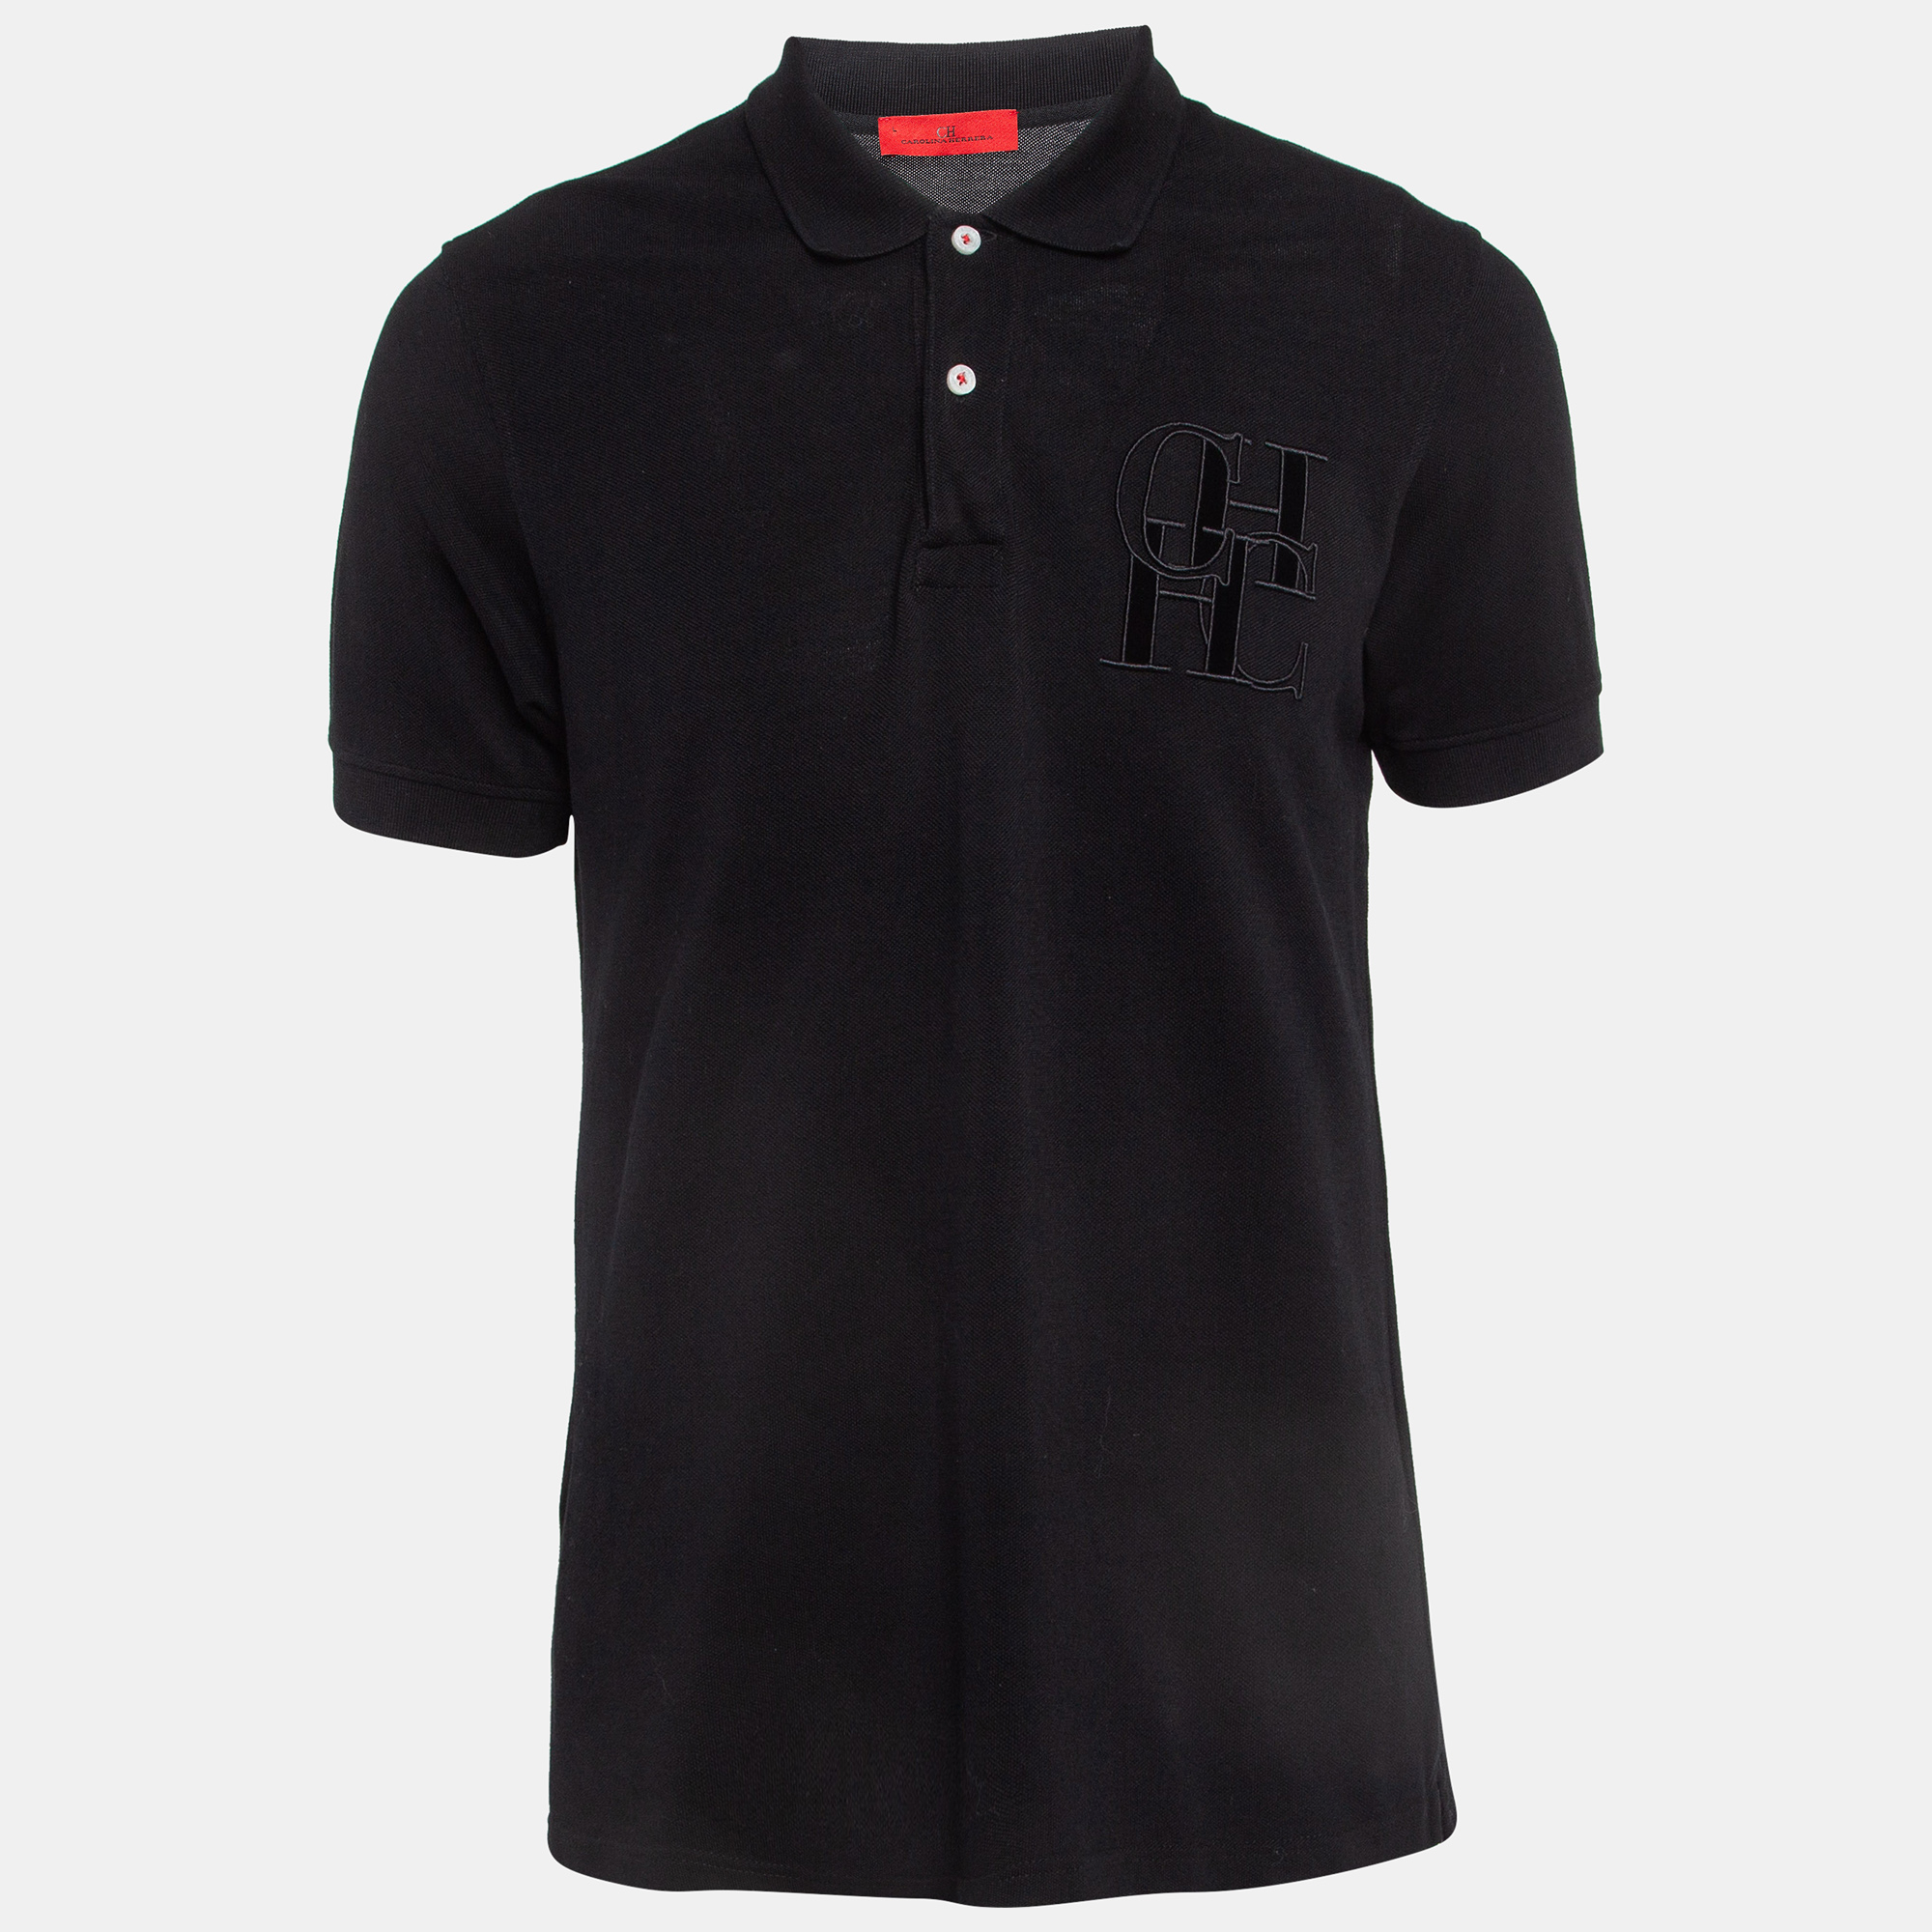 Ch carolina herrera black embroidered cotton pique polo t-shirt l